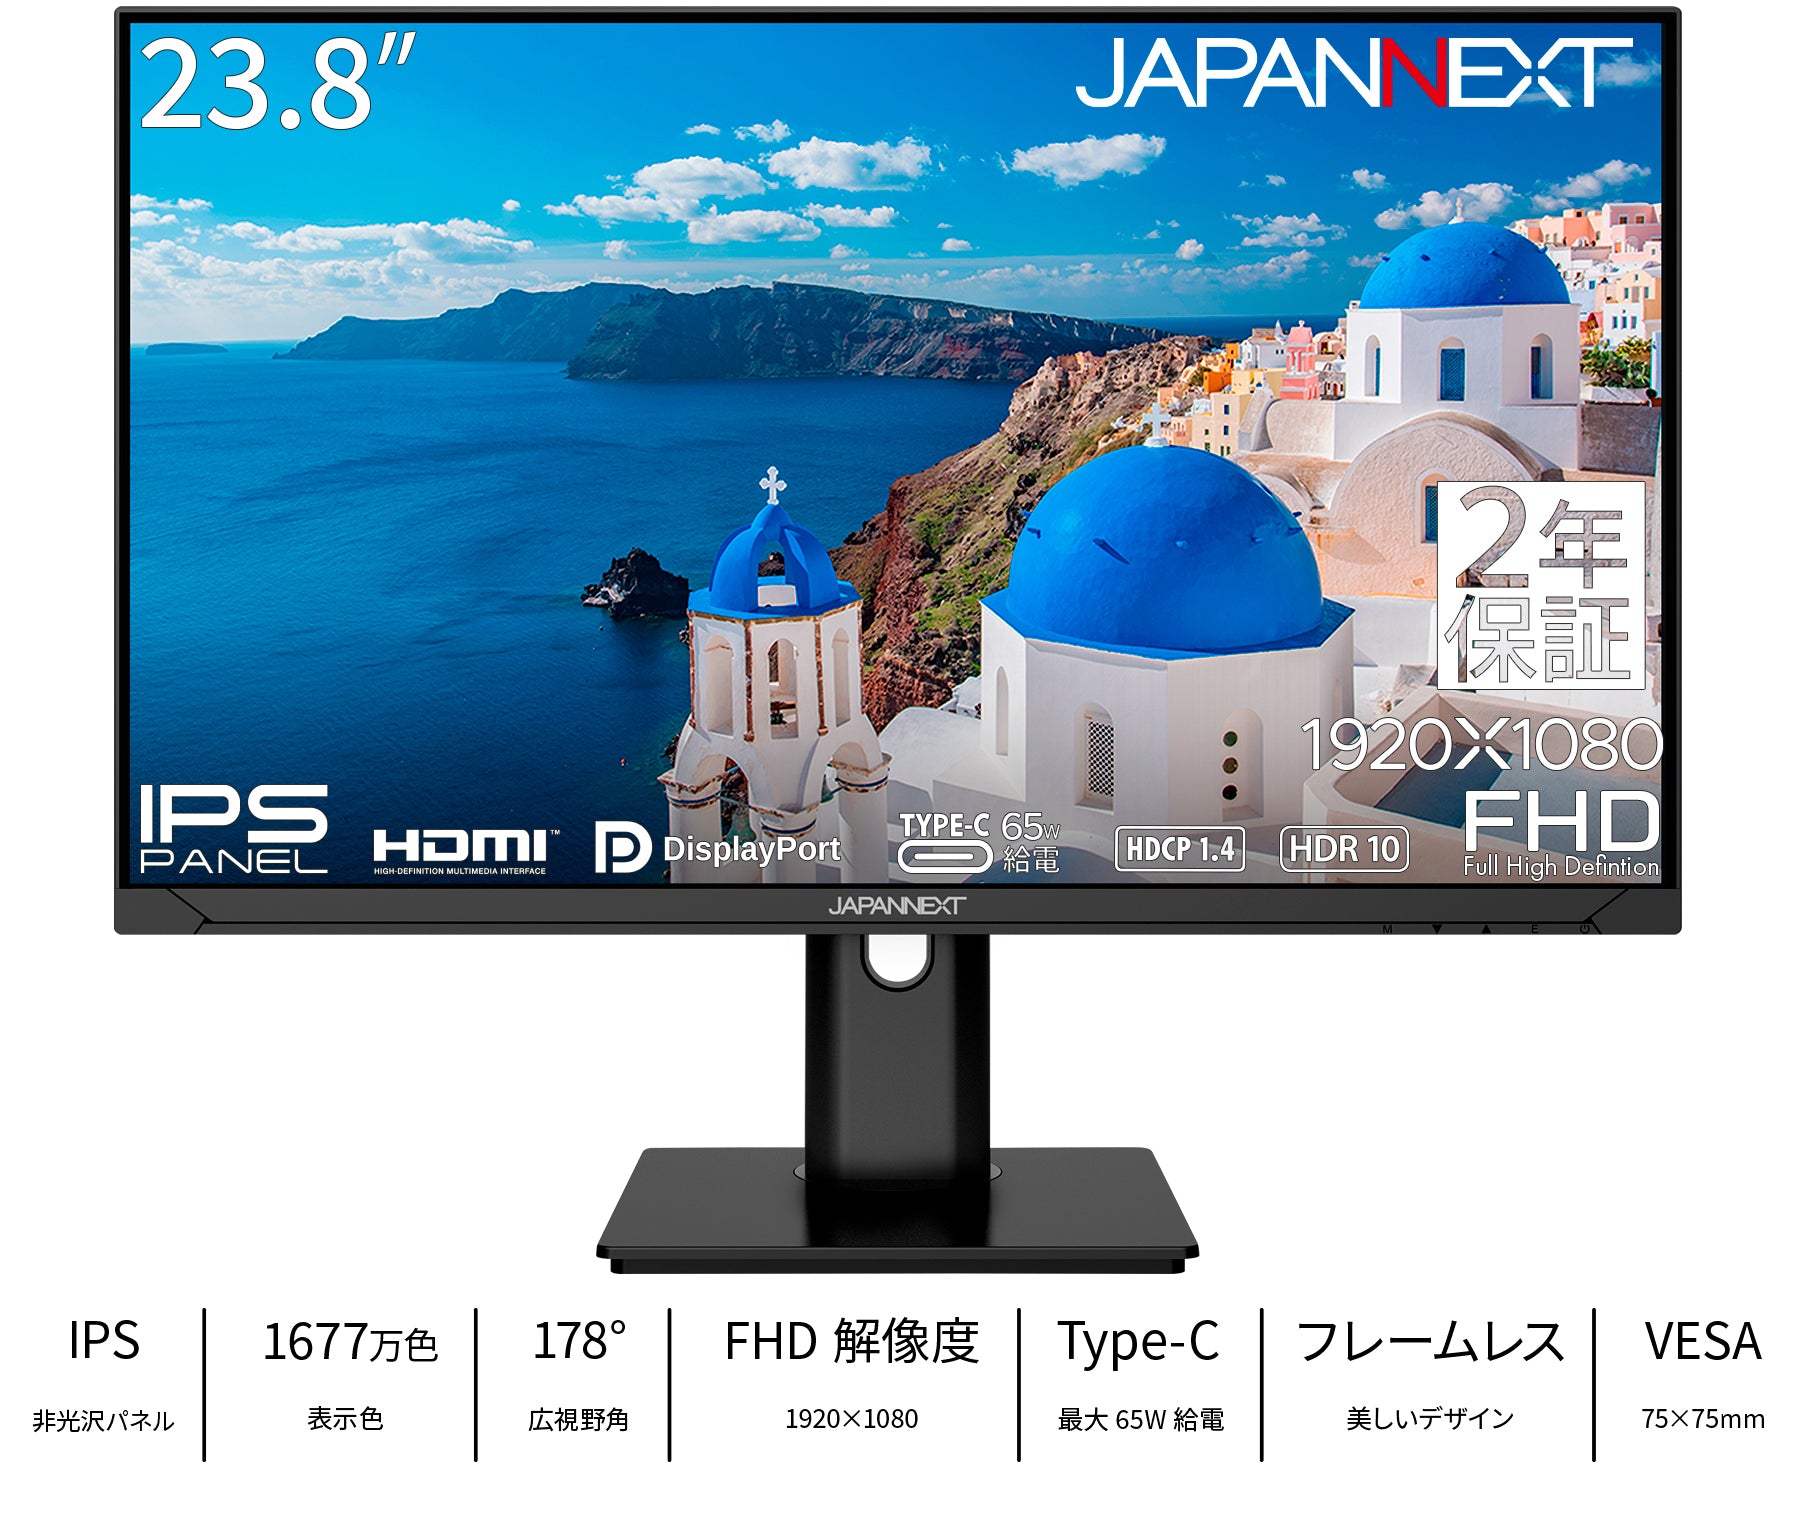 ASKUL限定】【2年保証モデル】JAPANNEXT 23.8インチ IPSパネル搭載 フルHD(1920x1080)解像度 液晶モニターJN-i238FR-C65W-HSP  HDMI DP USB Type-C HDR USB-C(最大65W)給電 高さ調整 ピボット機能搭載